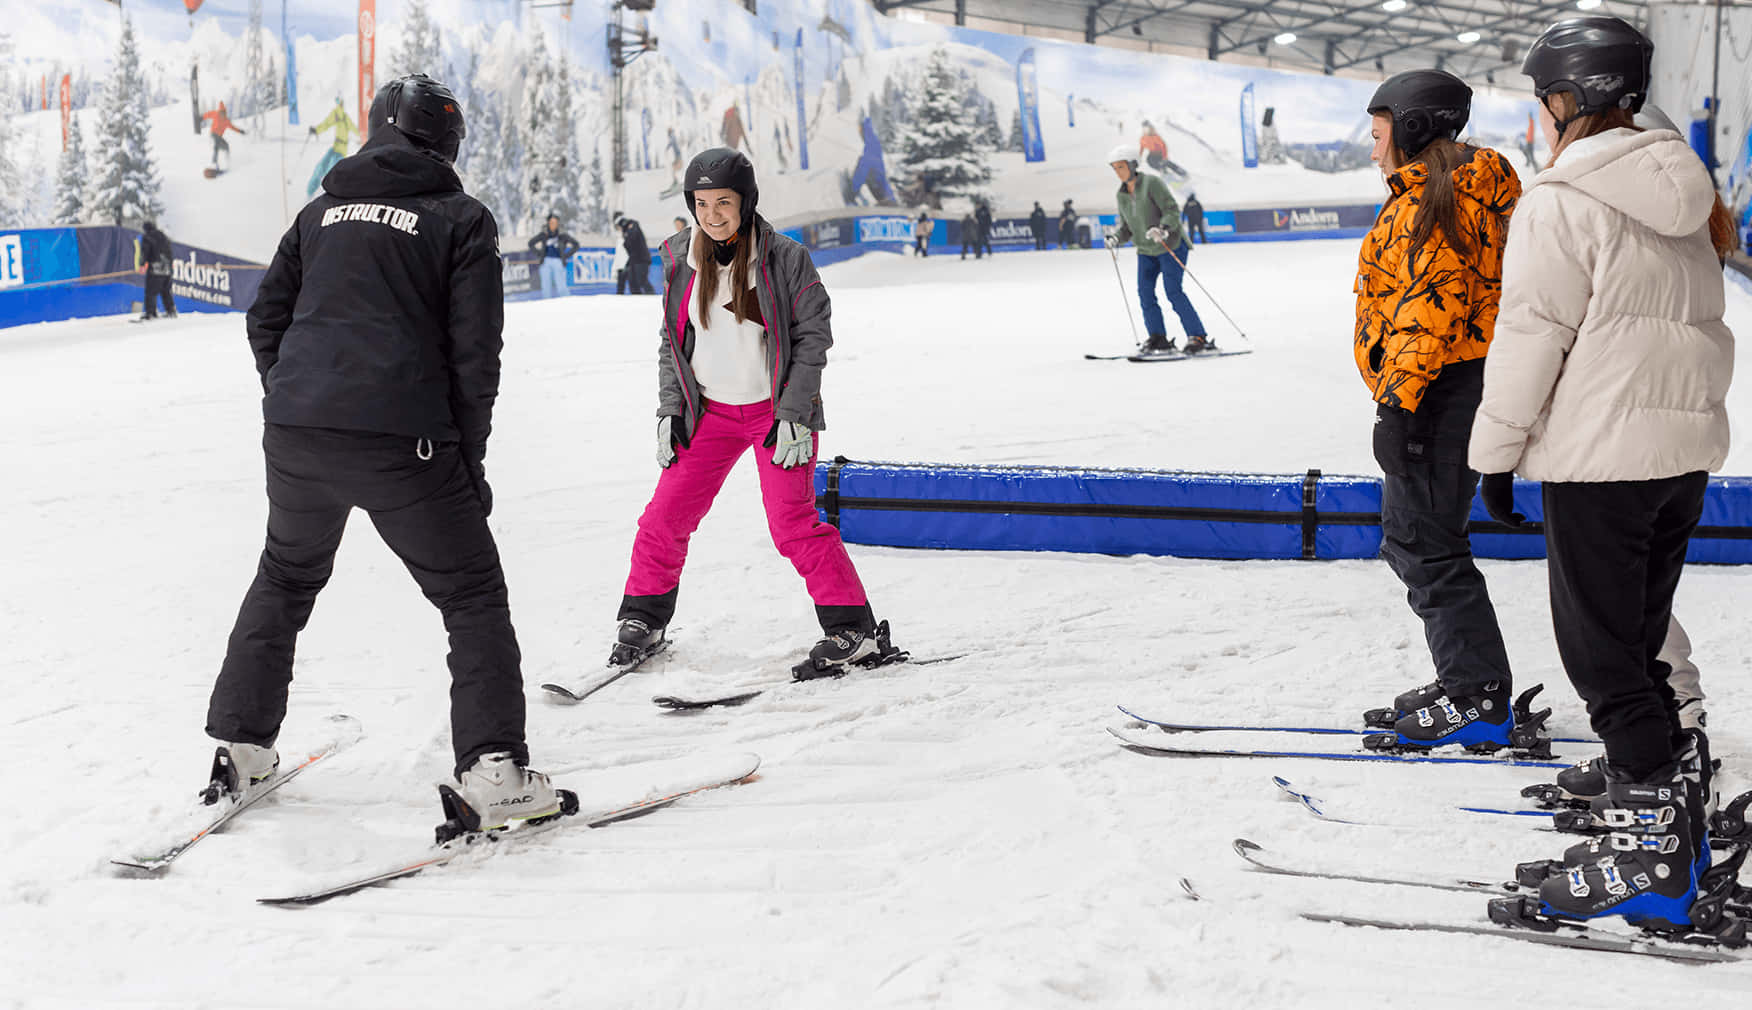 Enjoy the fresh powder sthe slopes offer during a ski holiday.